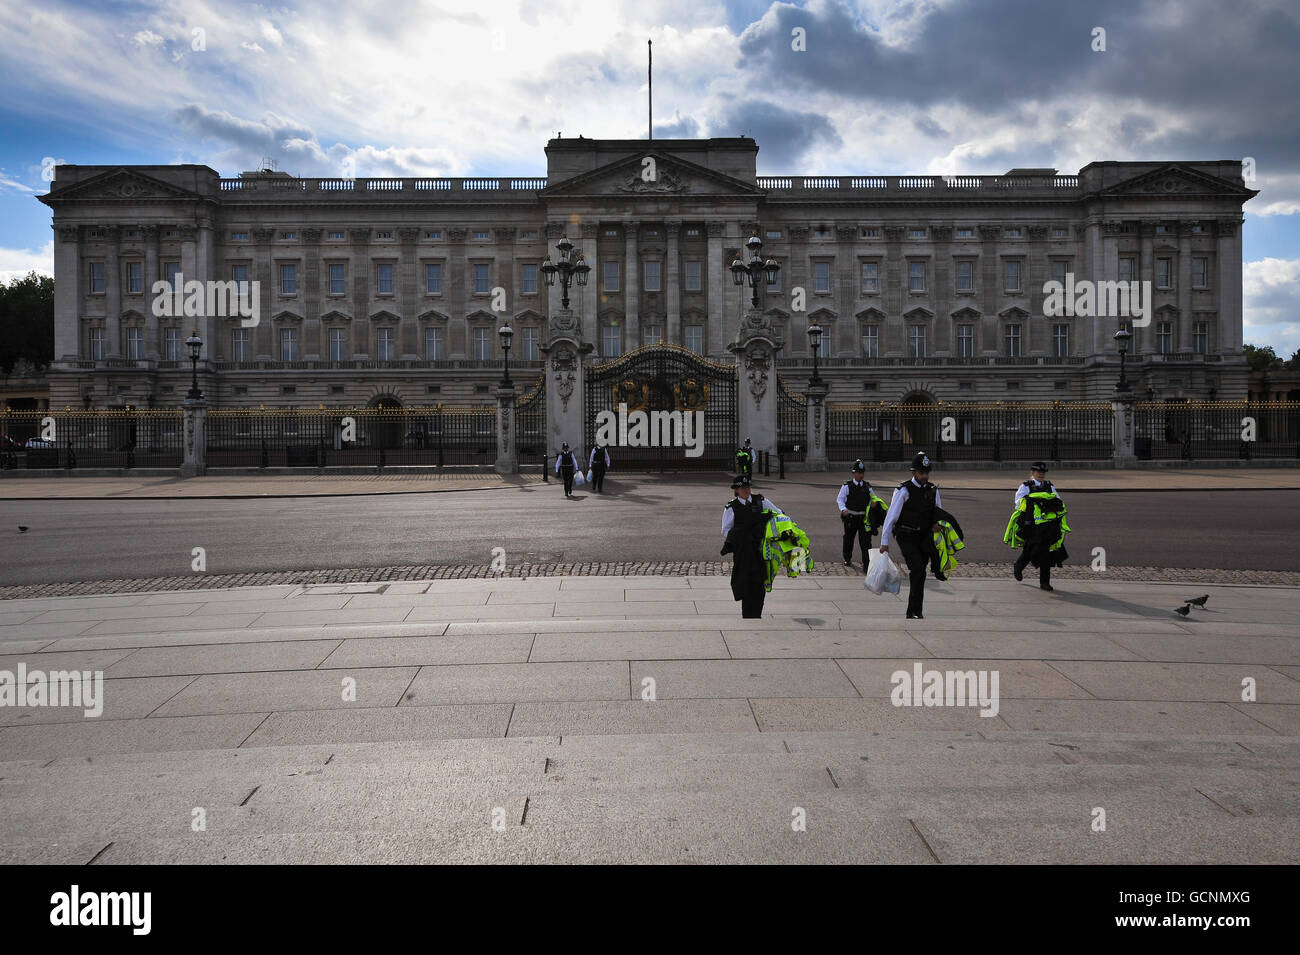 Buckingham Palace - London. Police walk away from Buckingham Palace. London, UK. Stock Photo